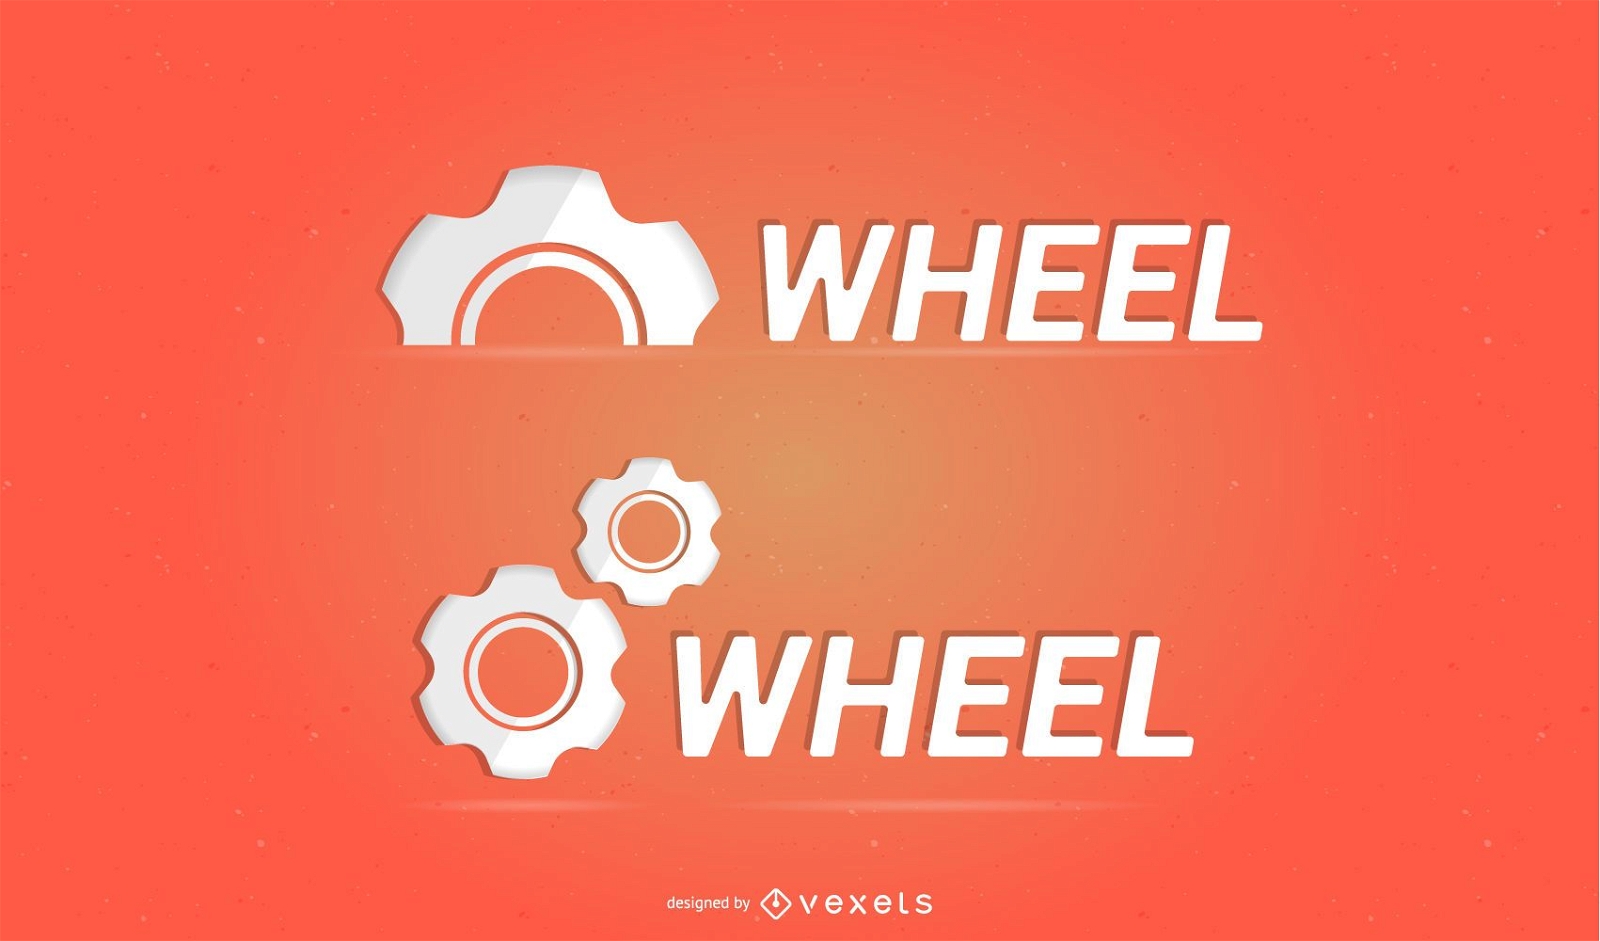 Free Vector Logo - Gear